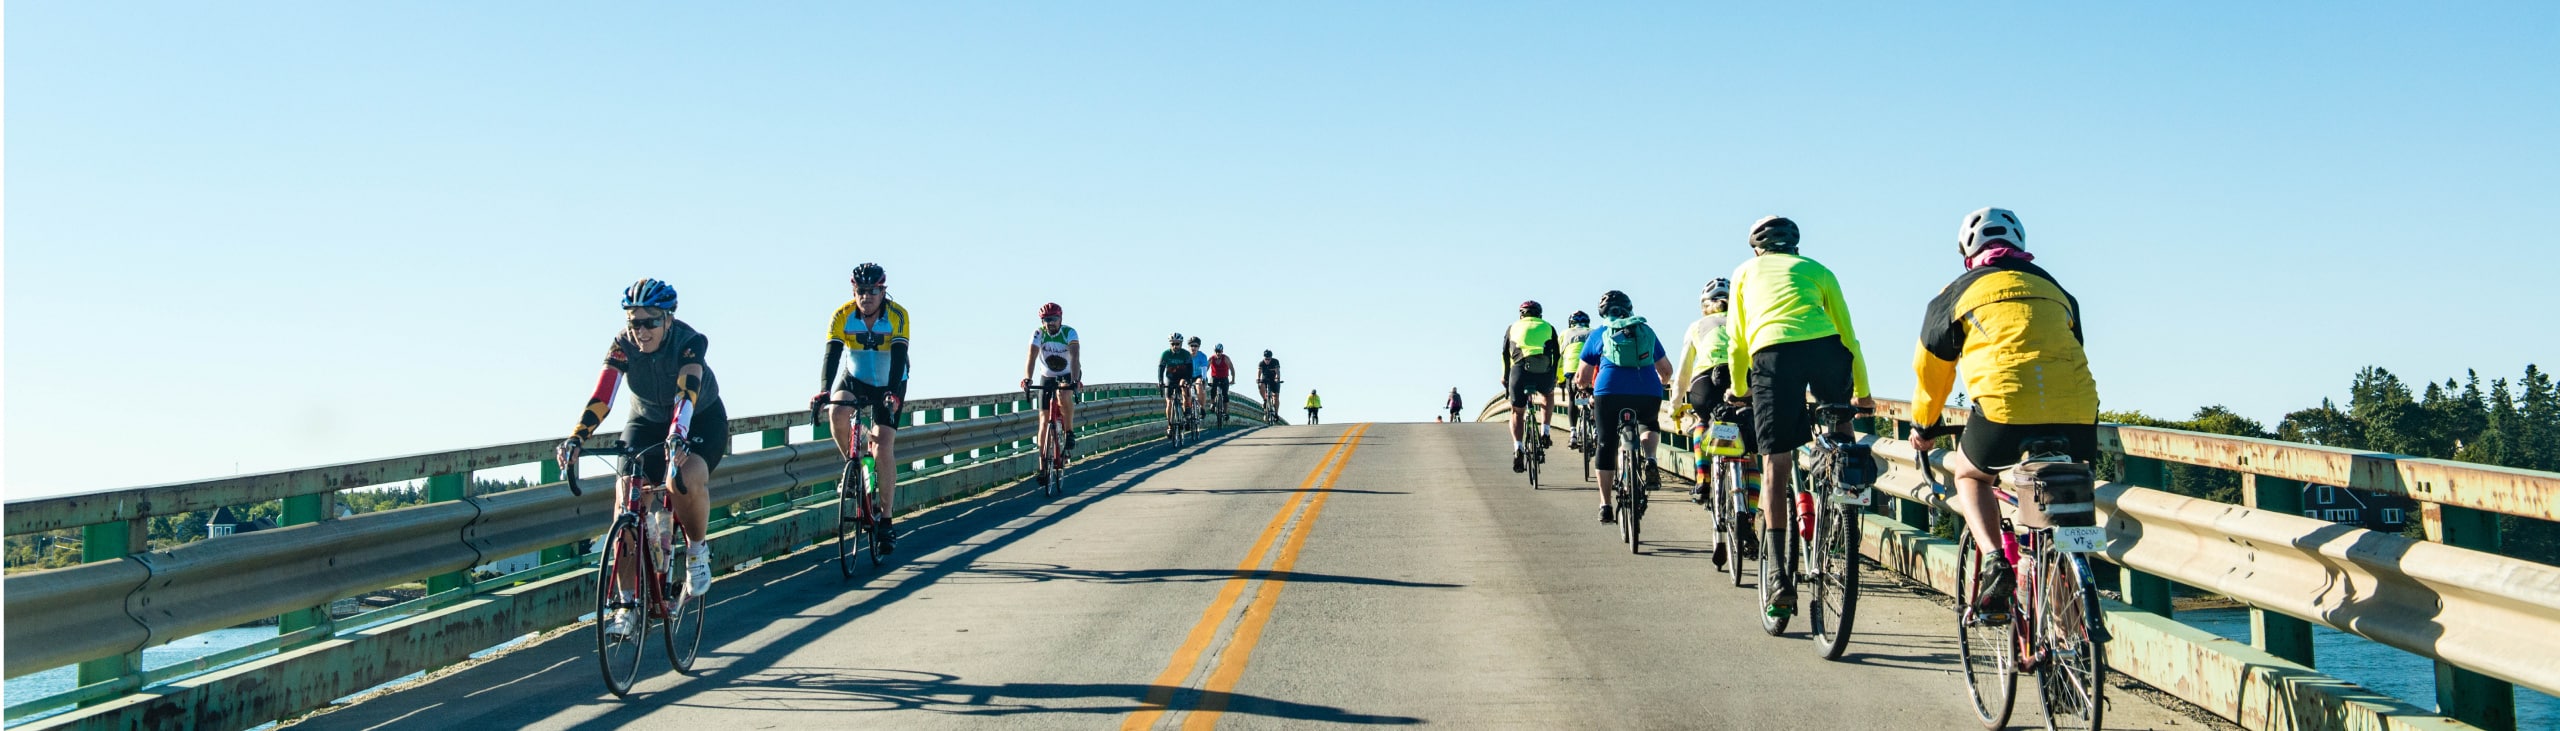 bike riders on a bridge